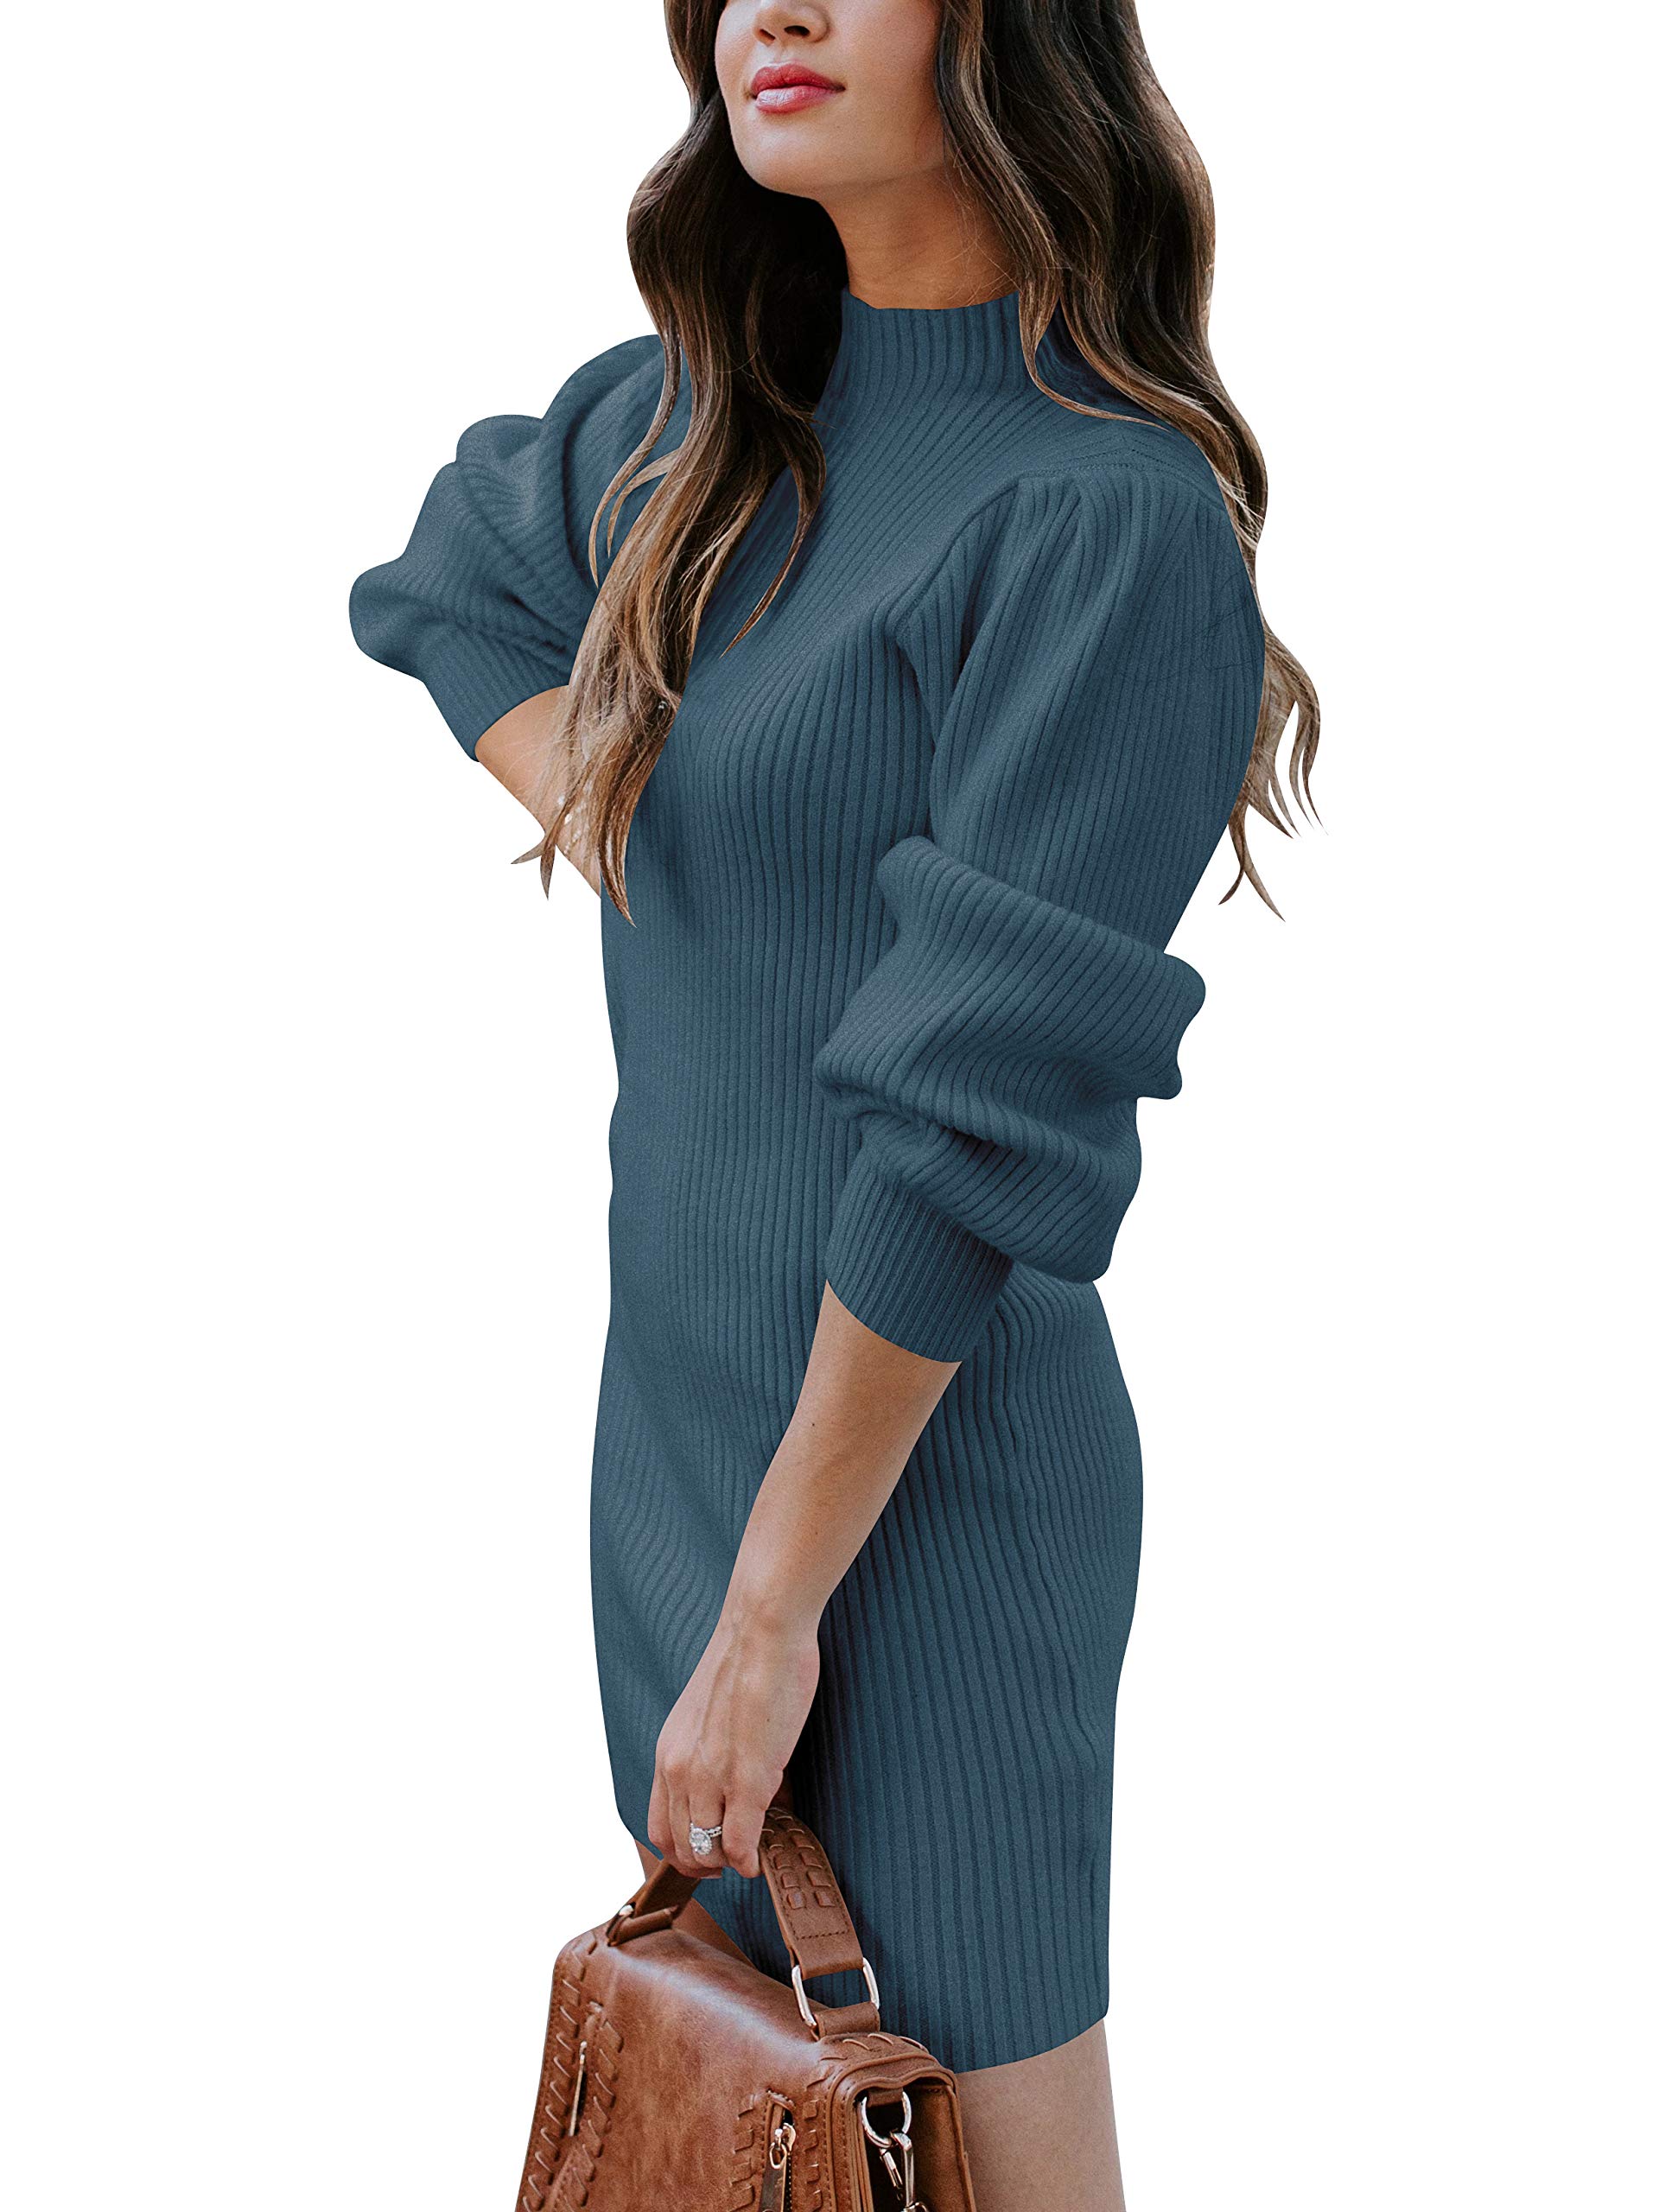 Caracilia Women Turtleneck Long Sleeve Knit Pullover Sweater Bodycon Mini  Dress